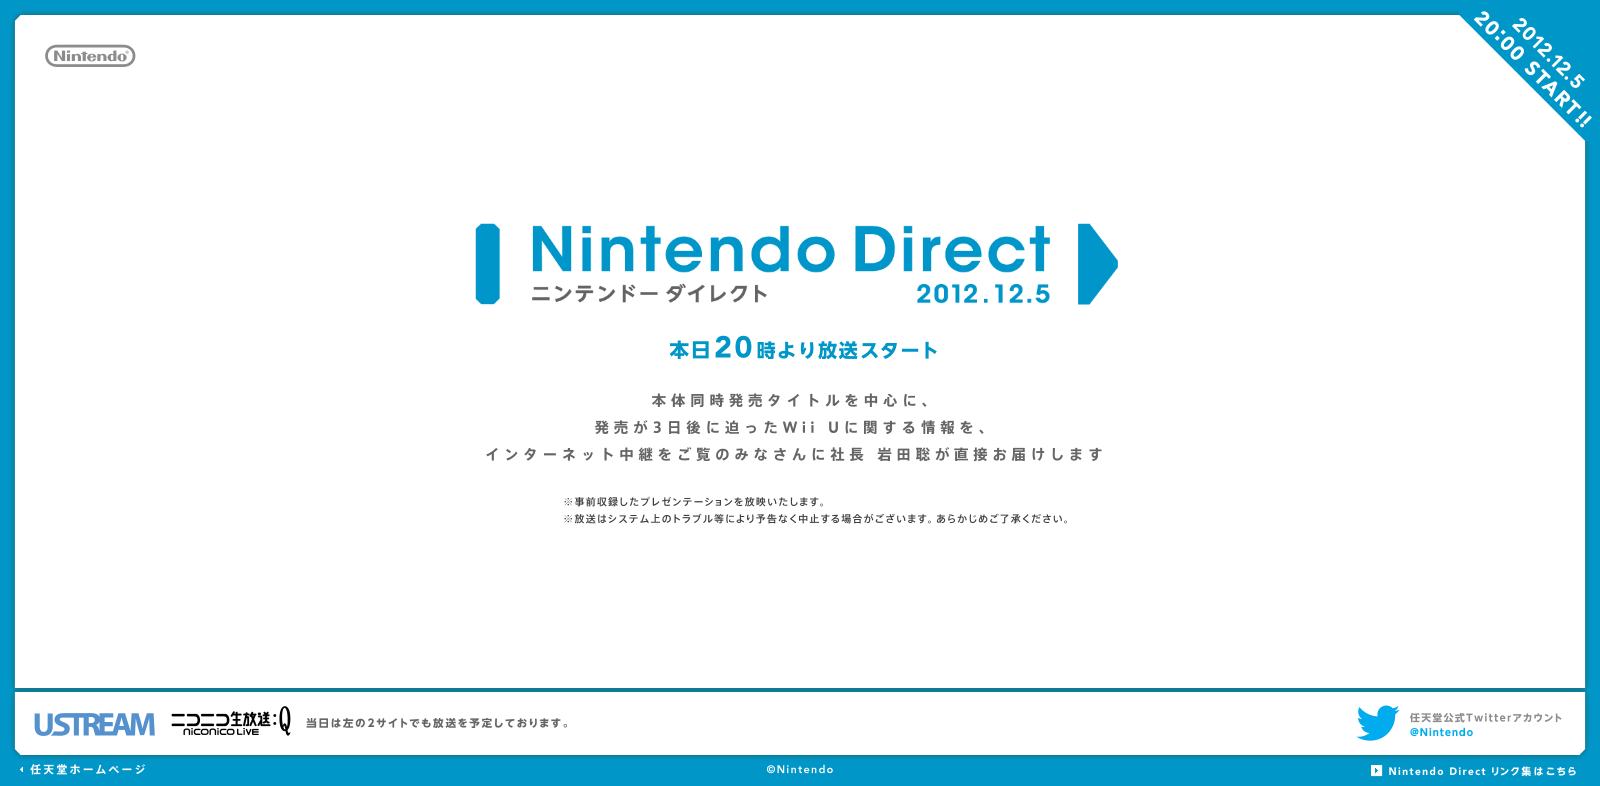 Japanese Nintendo Direct set for the early morning tomorrow Nintendo